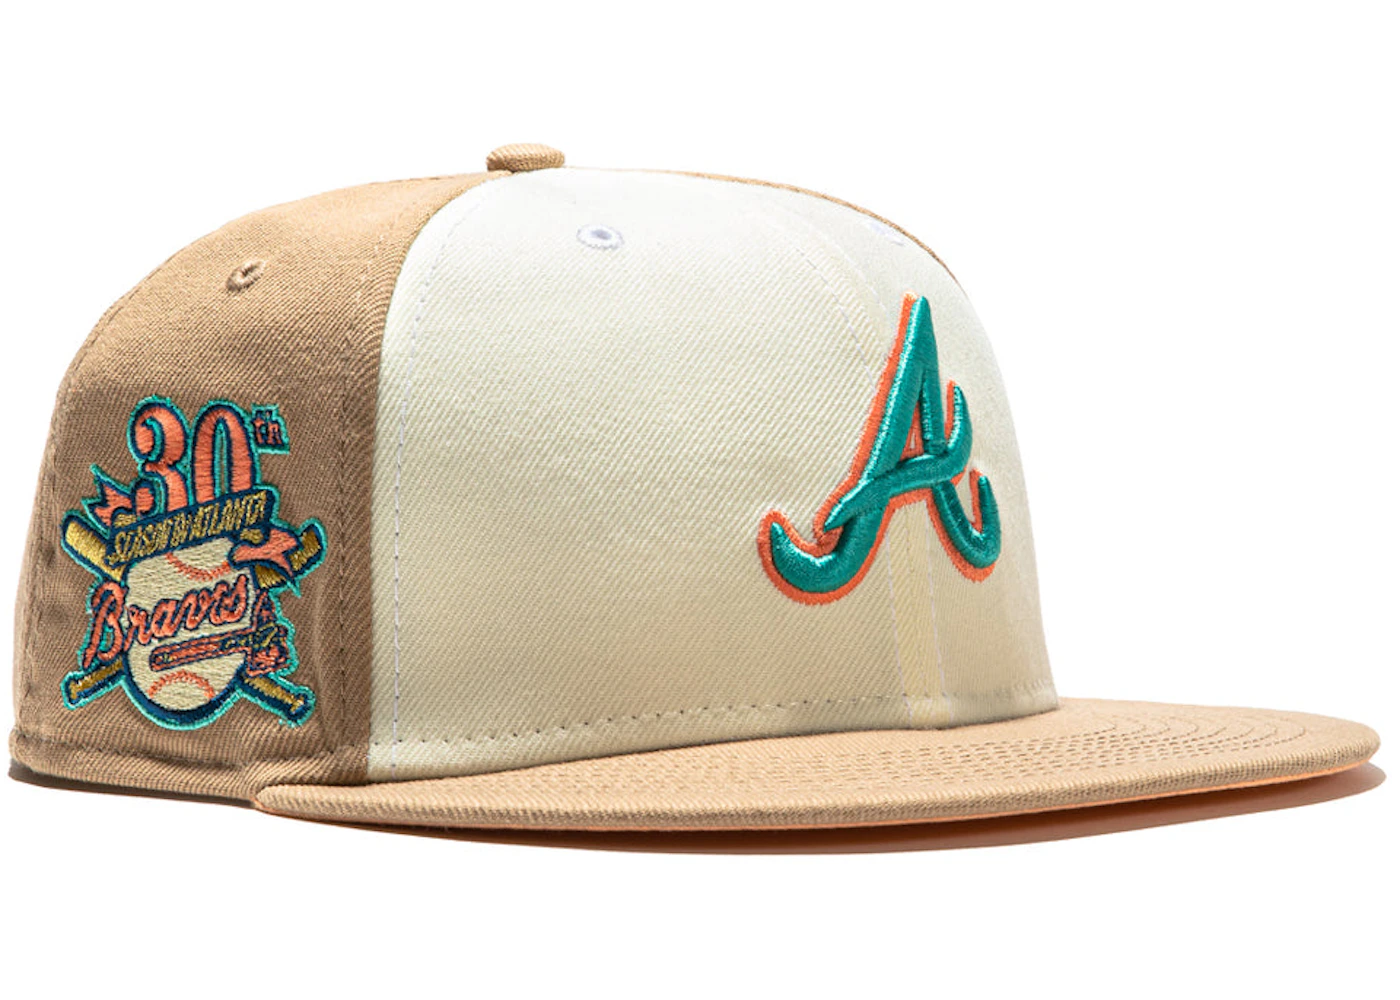 Fdny 20th Anniversary Baseball Hat